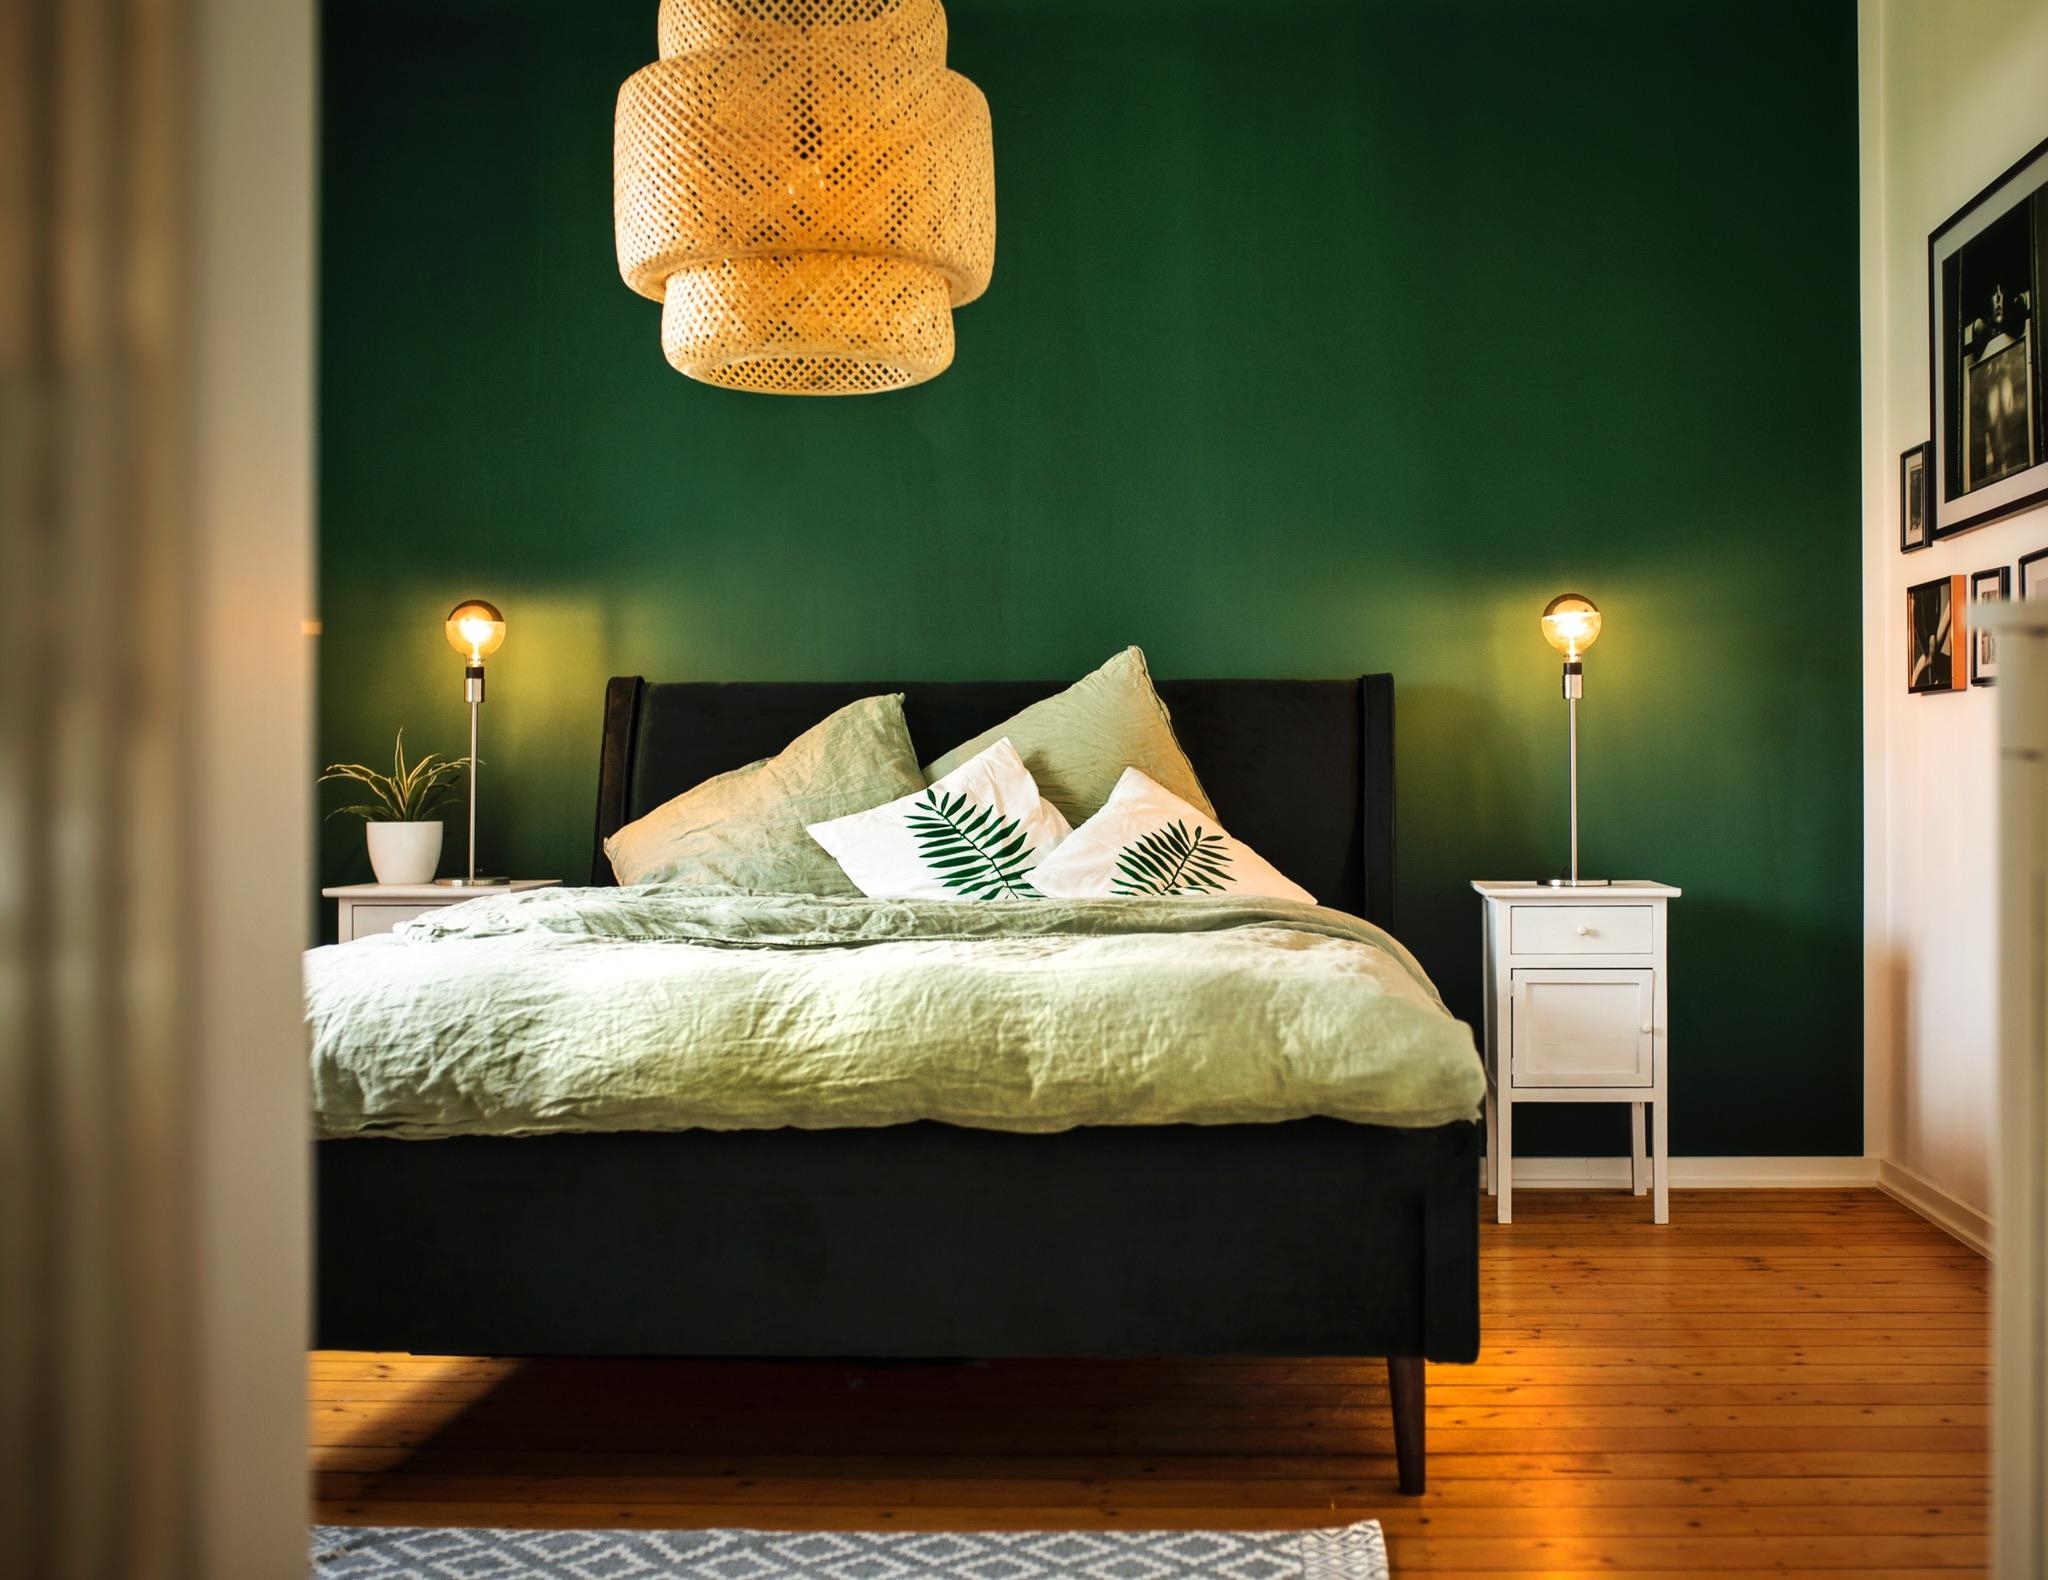 #bedroom #wallcolor #retrostyle #sleepingroom #zuhausesein - Ruheoase im Grünen ohne schlechtes Wetter #greenchallenge